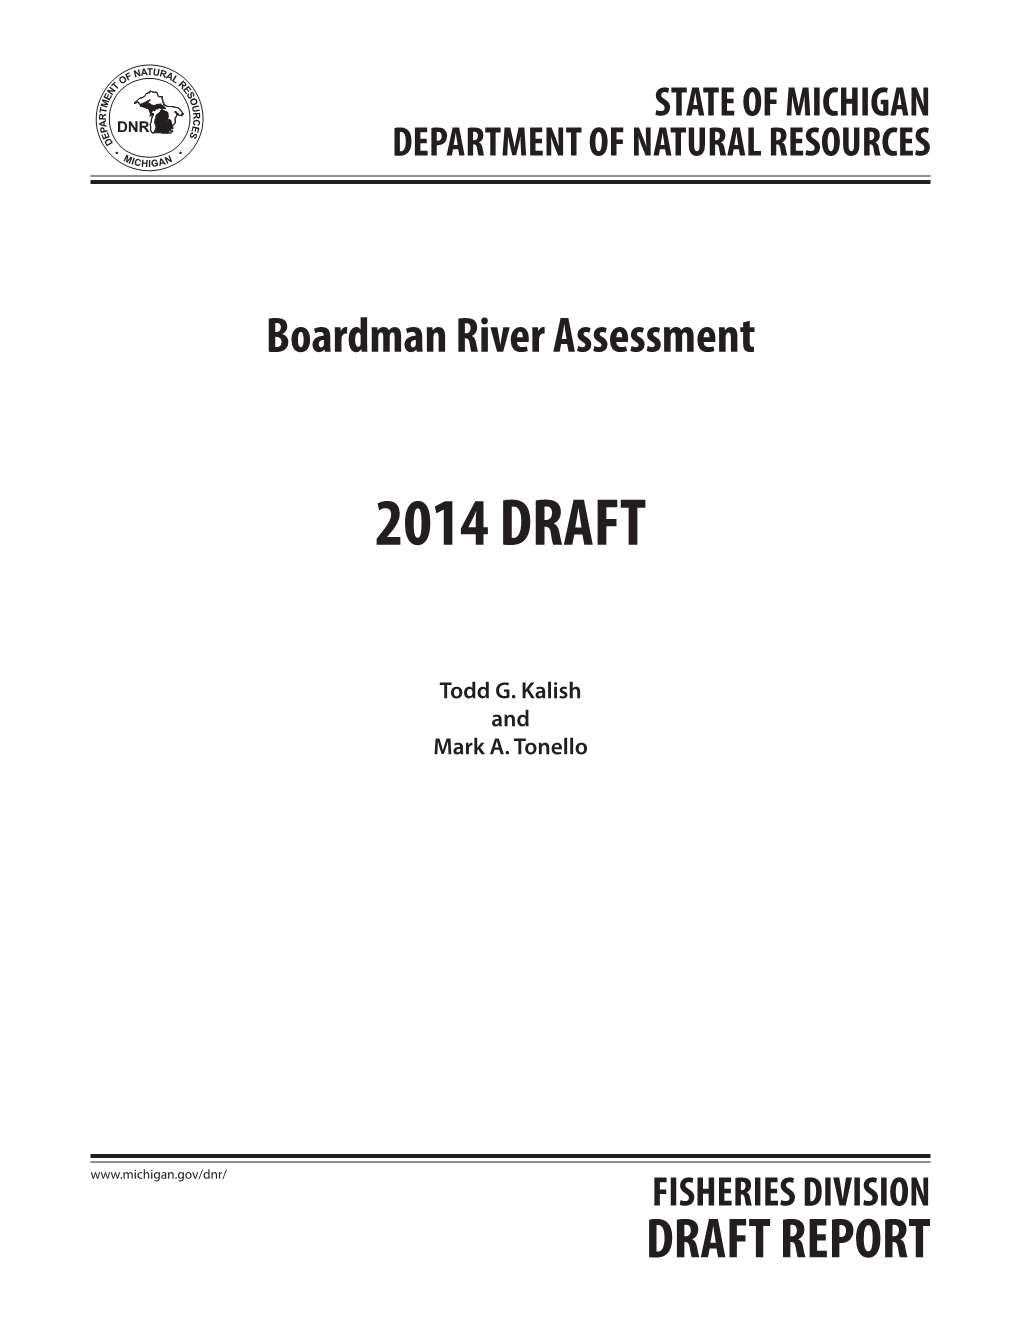 DRAFT Boardman River Assessment March 2014